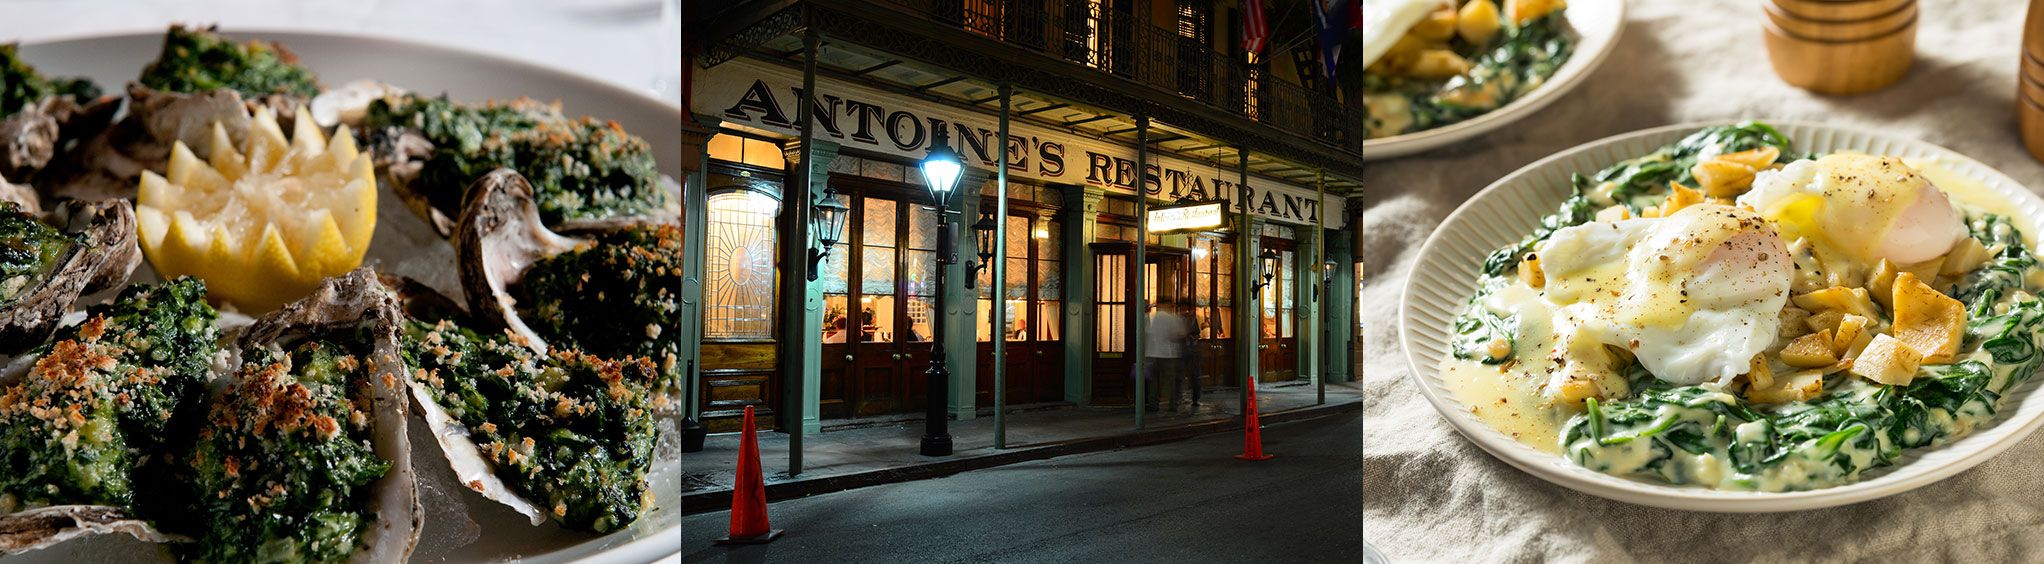 Antoine's Restaurant in New Orleans, LA